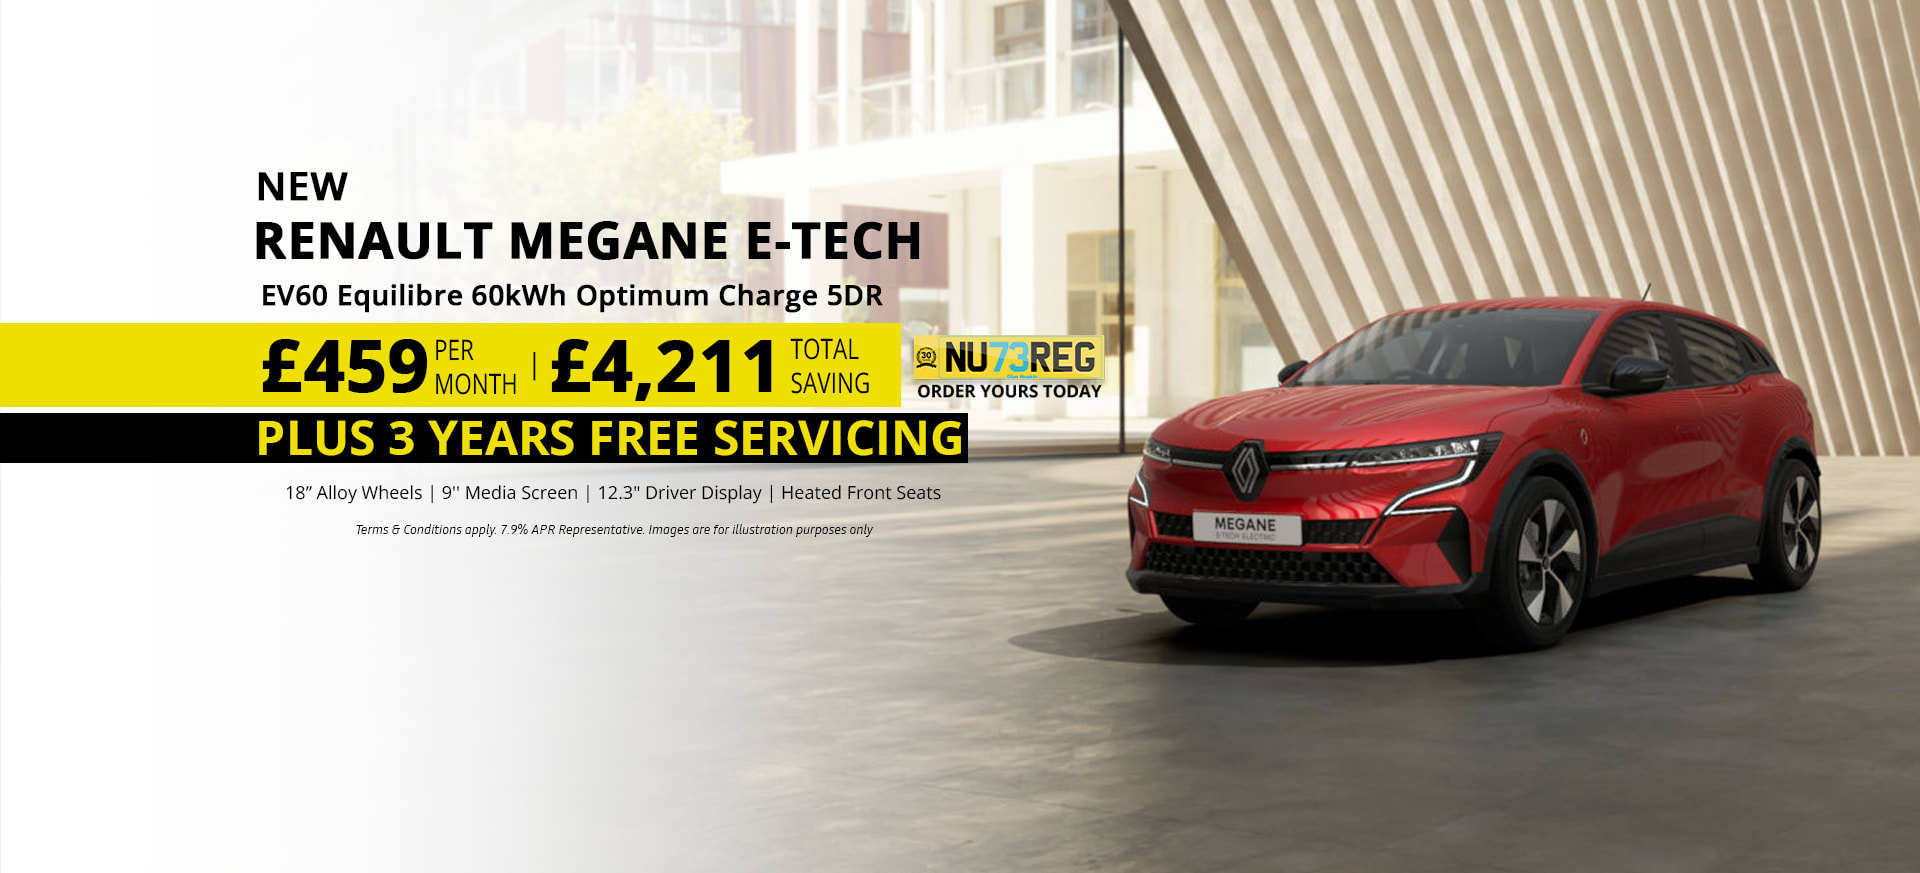 New Renault Megane E-Tech